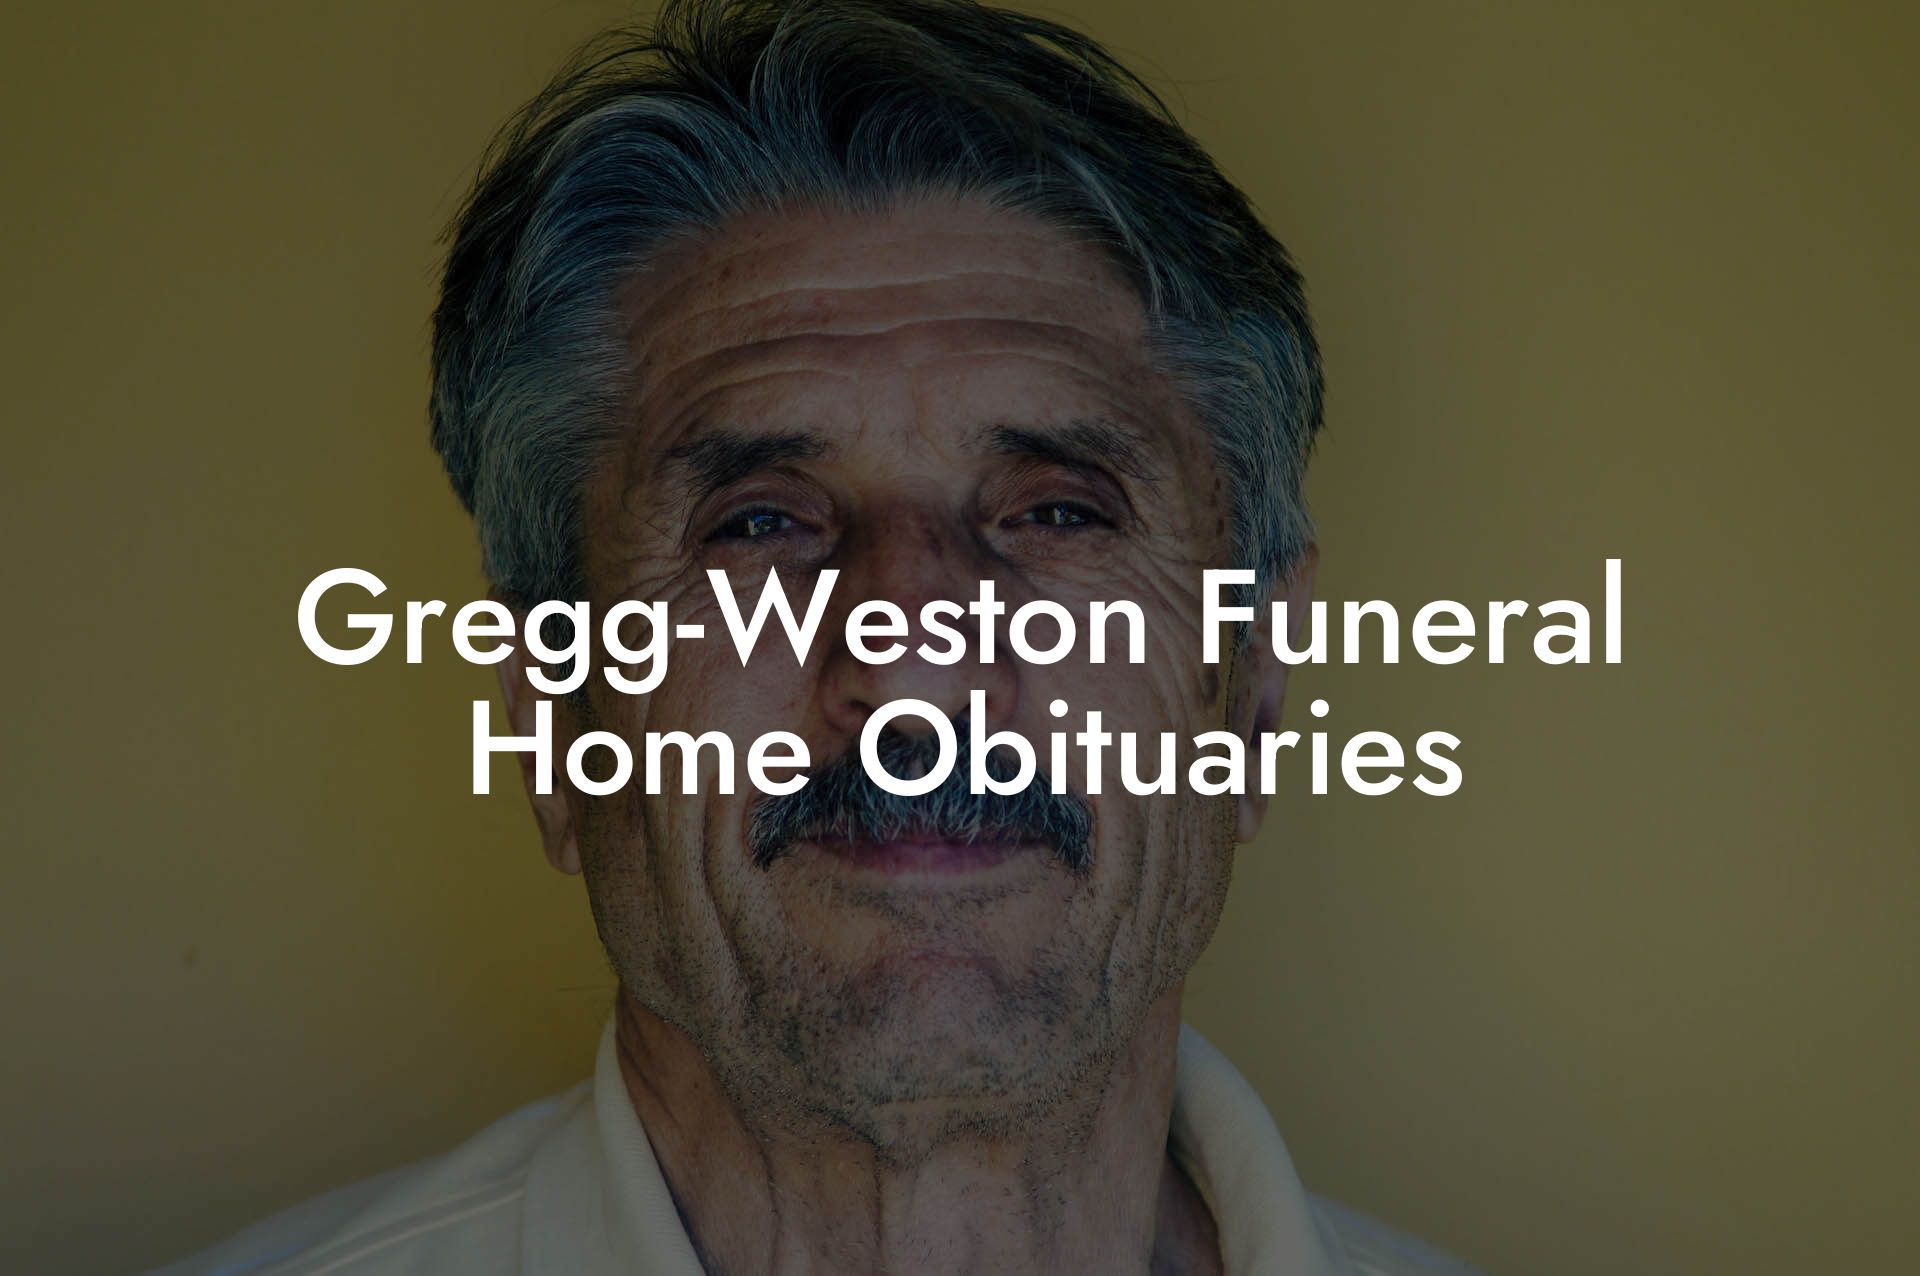 Gregg-Weston Funeral Home Obituaries